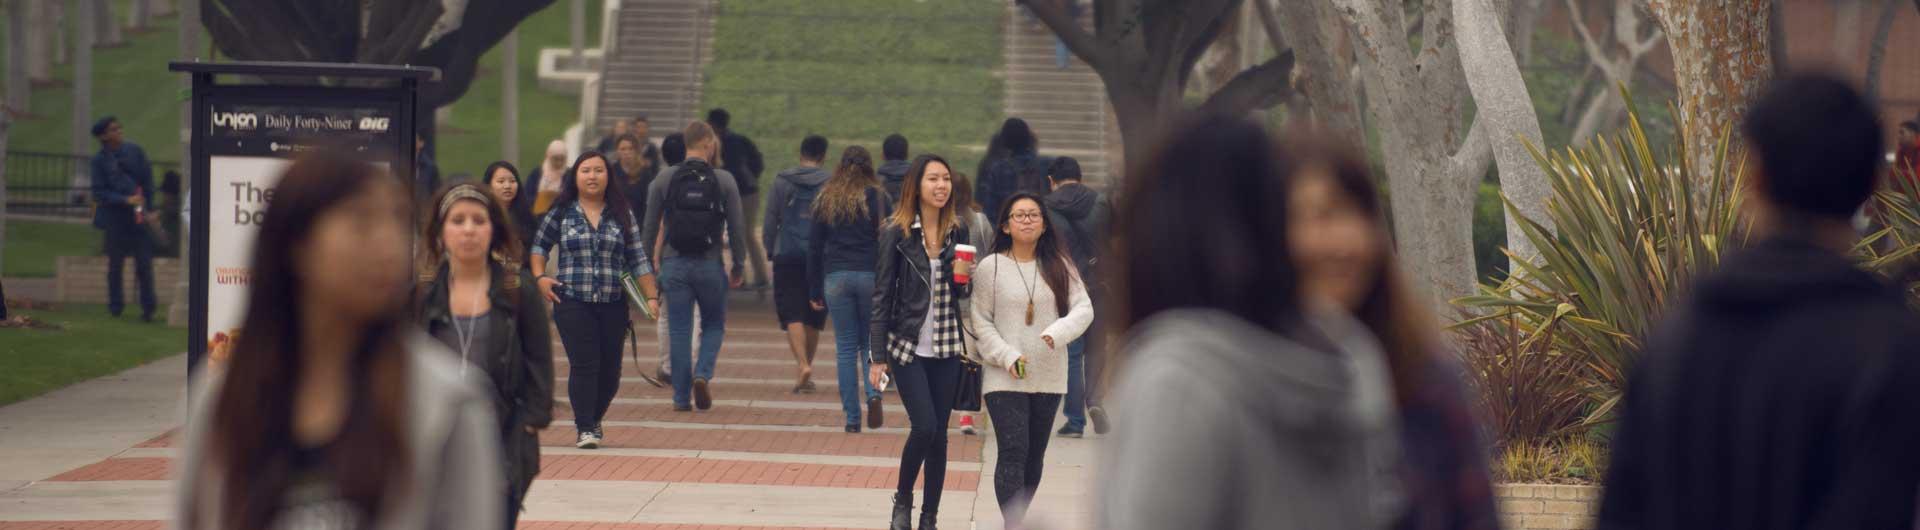 Students on Friendship Walk